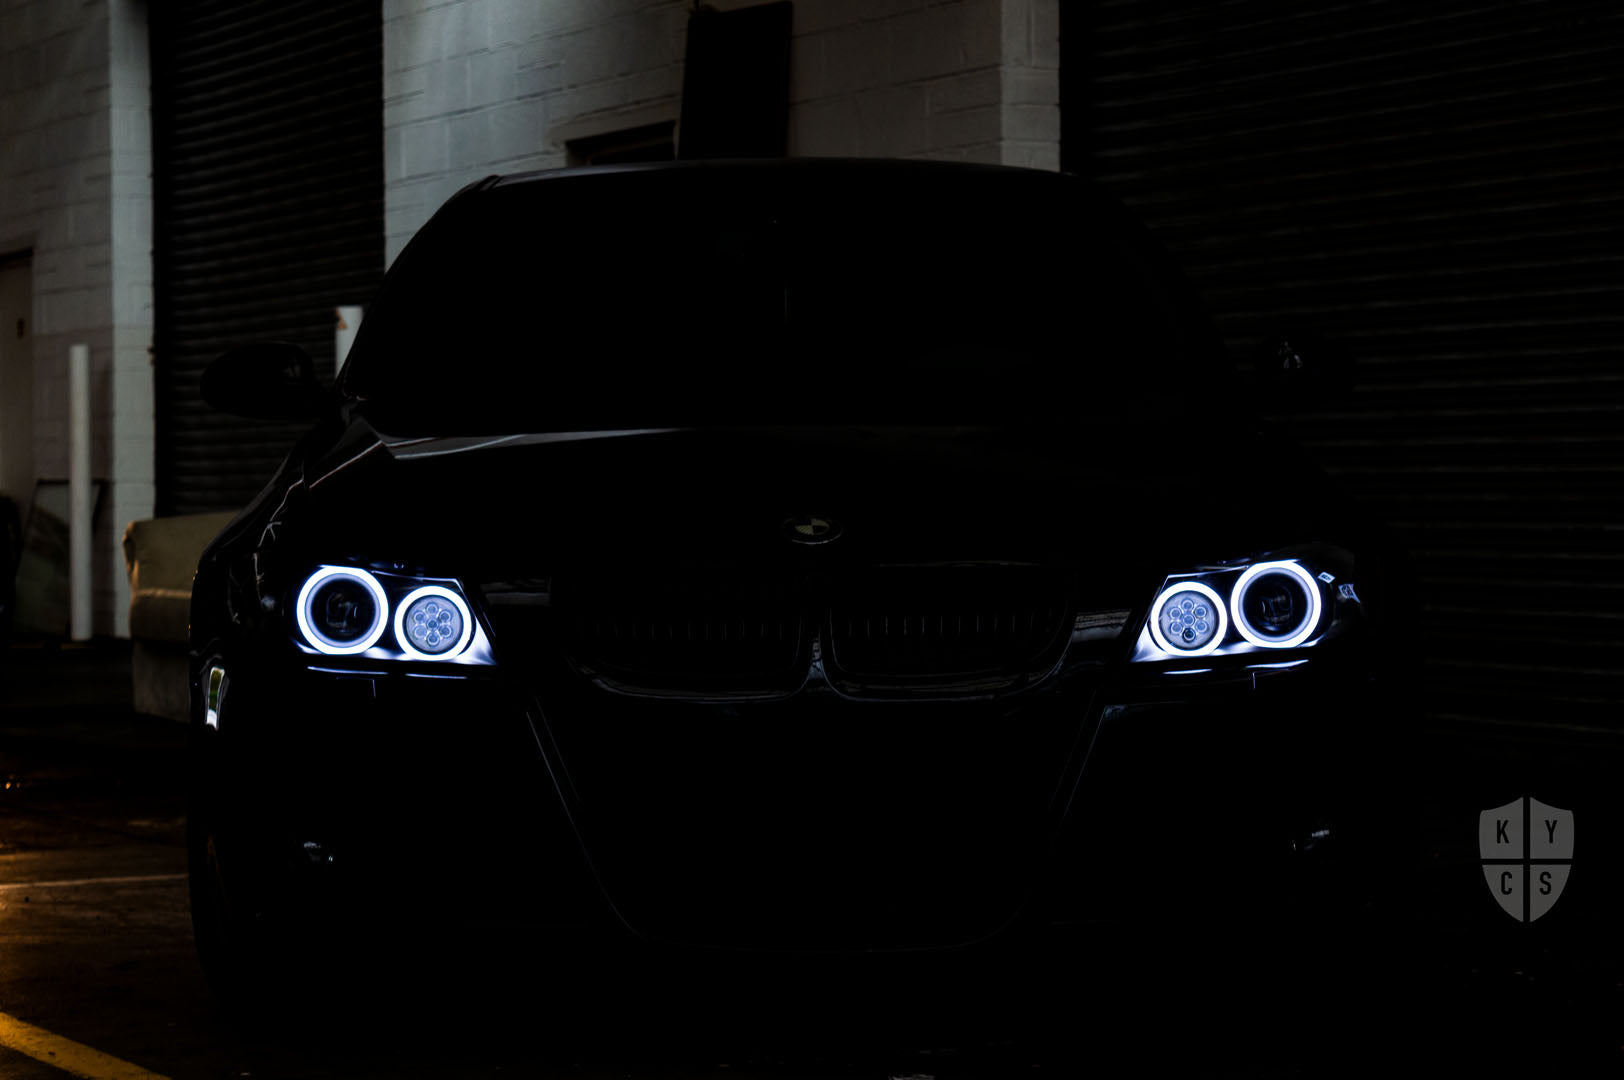 Headlight options on the above vehicle: KYCS (white) angel eyes | Classic blackout | Upgraded high beam (high beam LED unit array style) | New headlight plastic lenses/covers | LED indicators